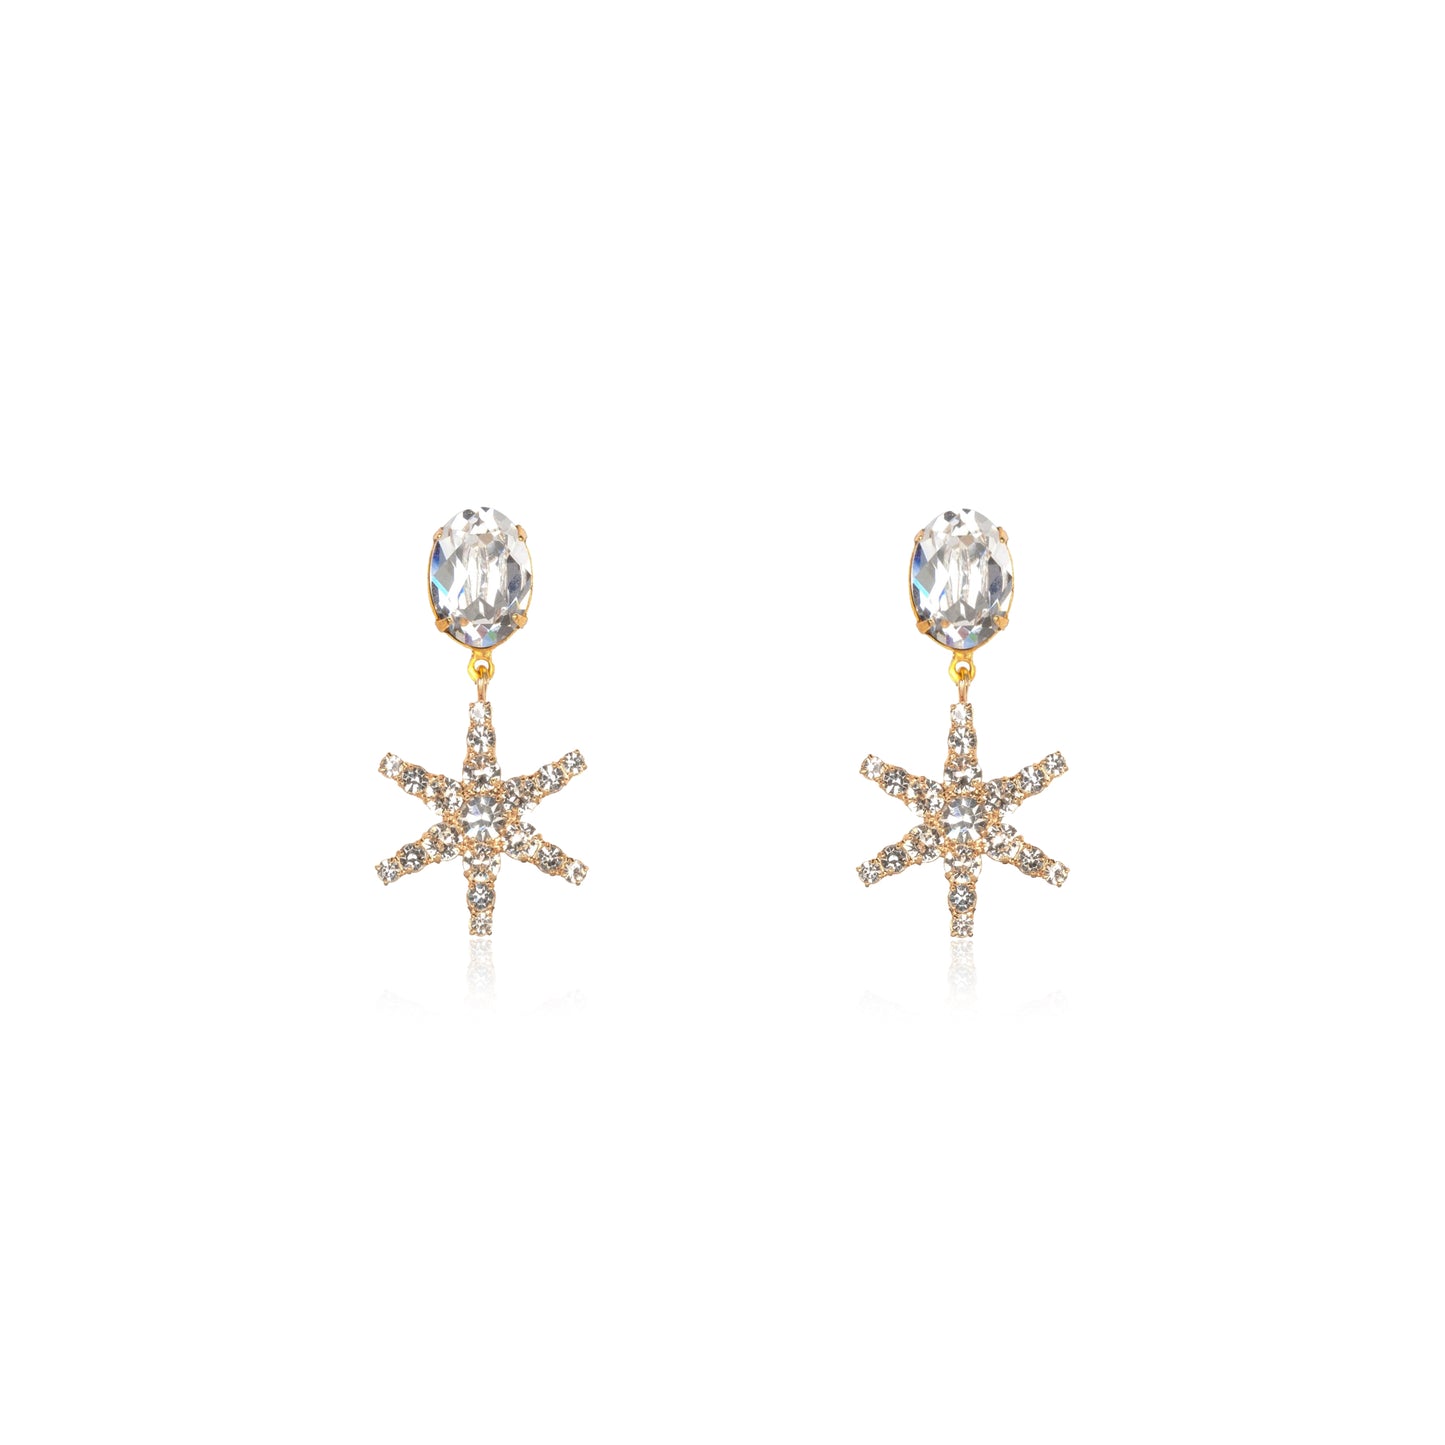 Polar Star earrings